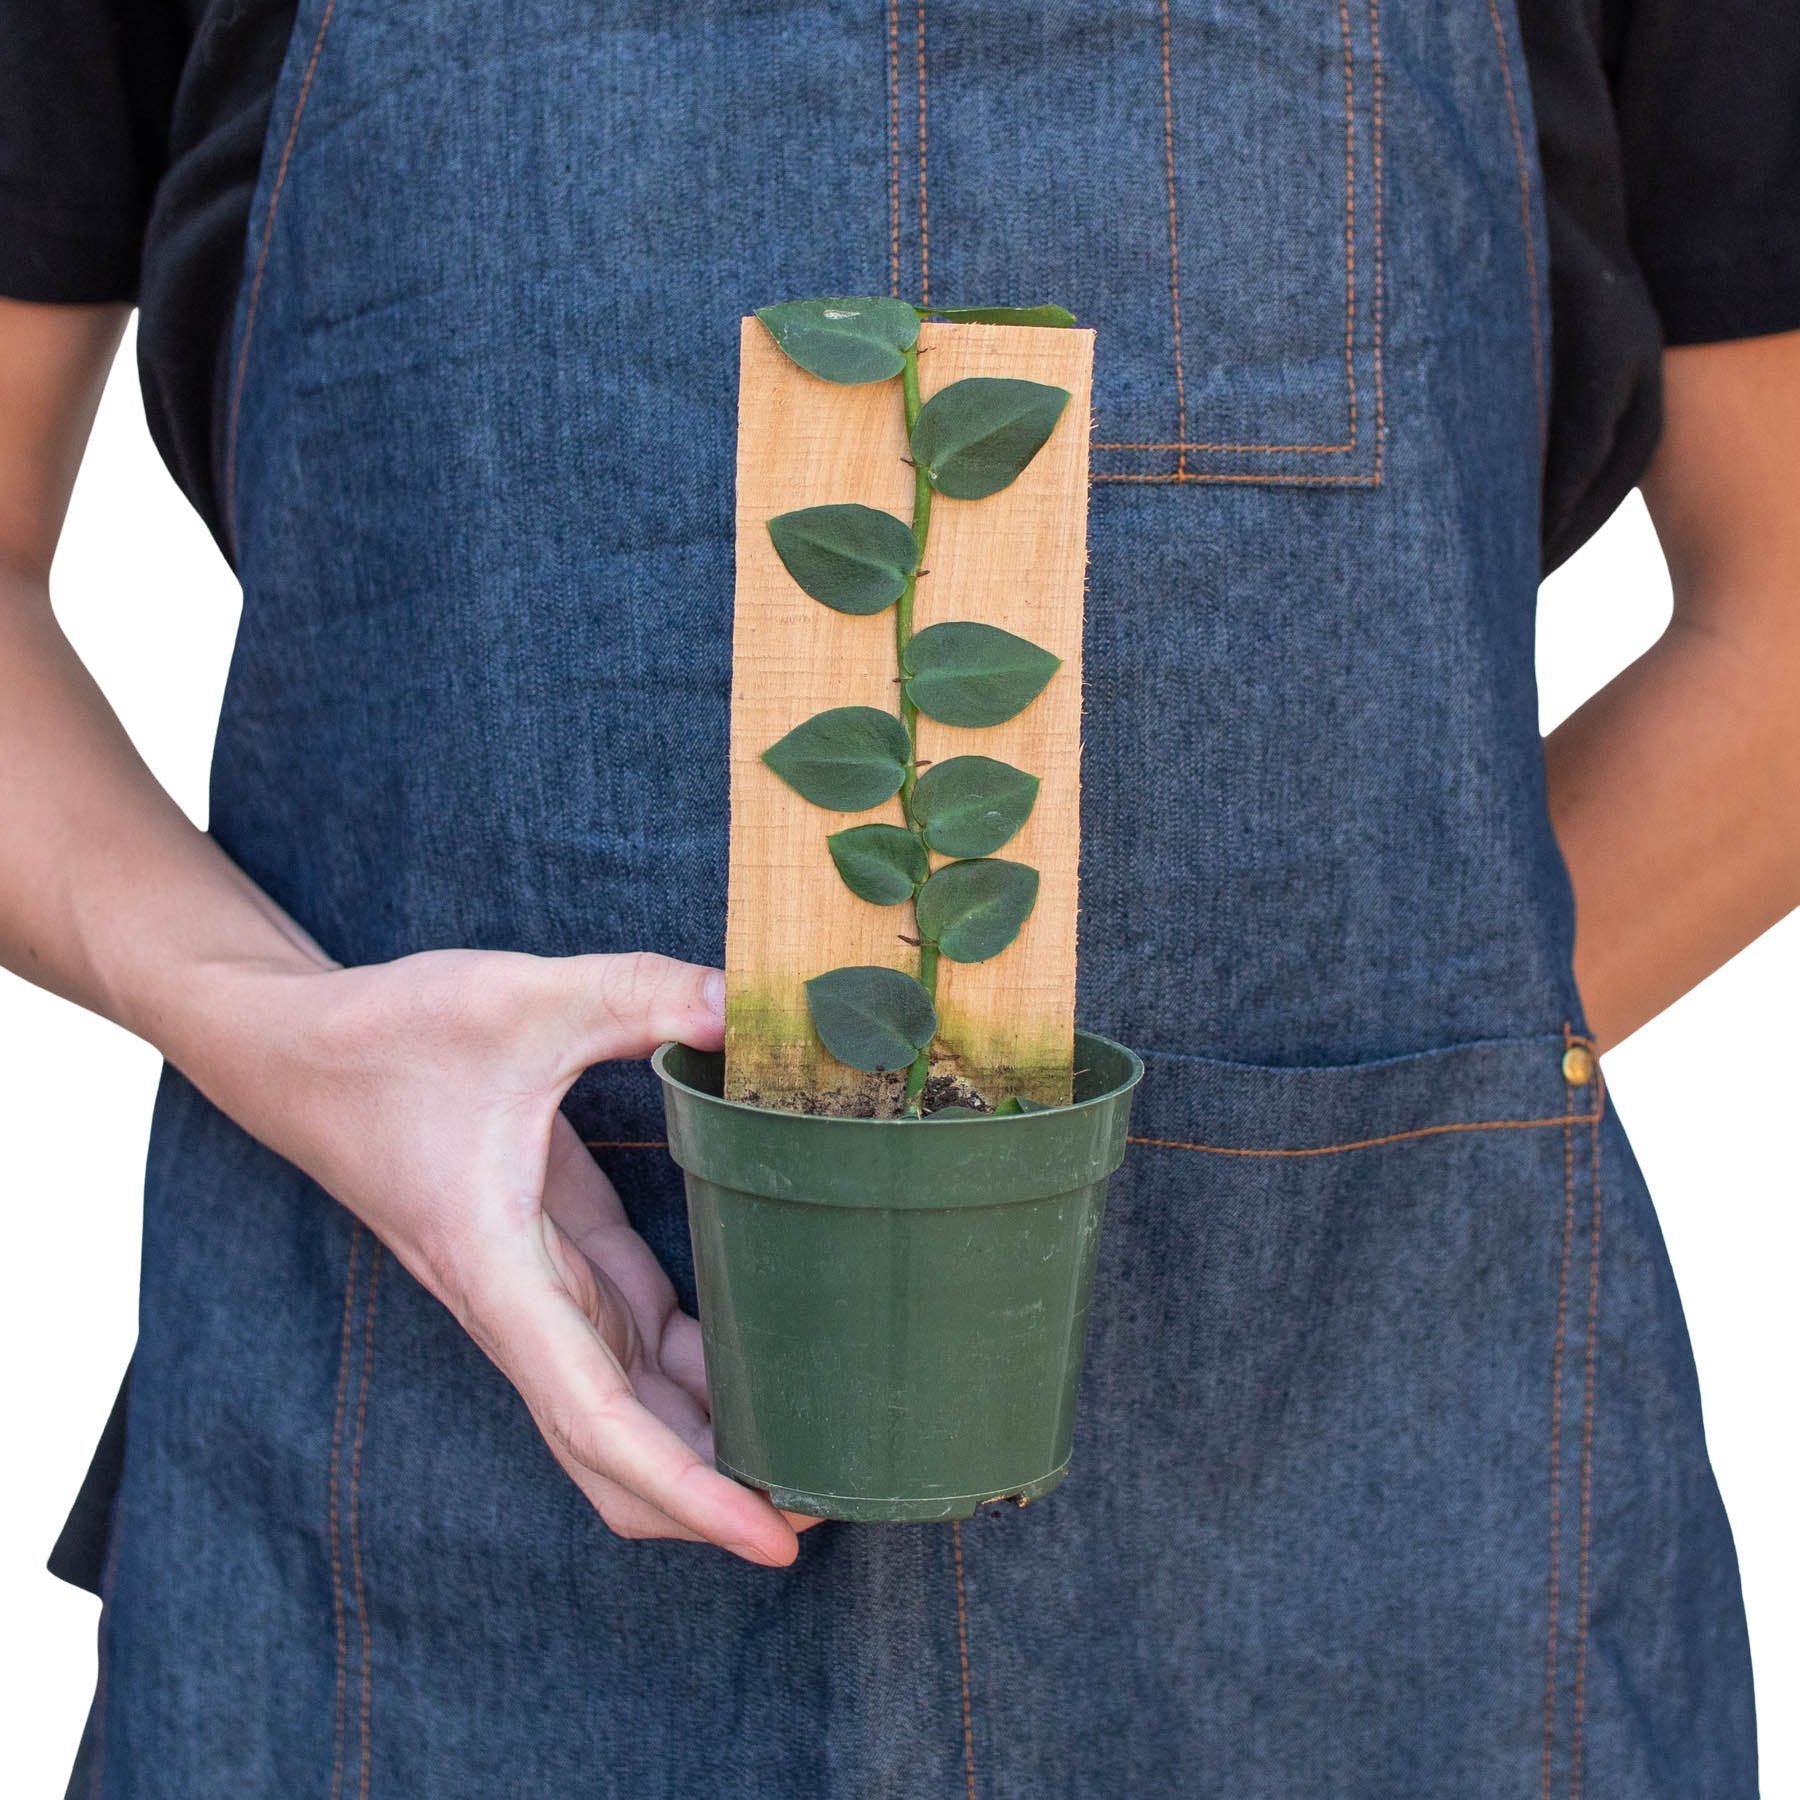 Rhaphidophora 'Shingle Plant' Indoor Plant - Mental Houseplants™